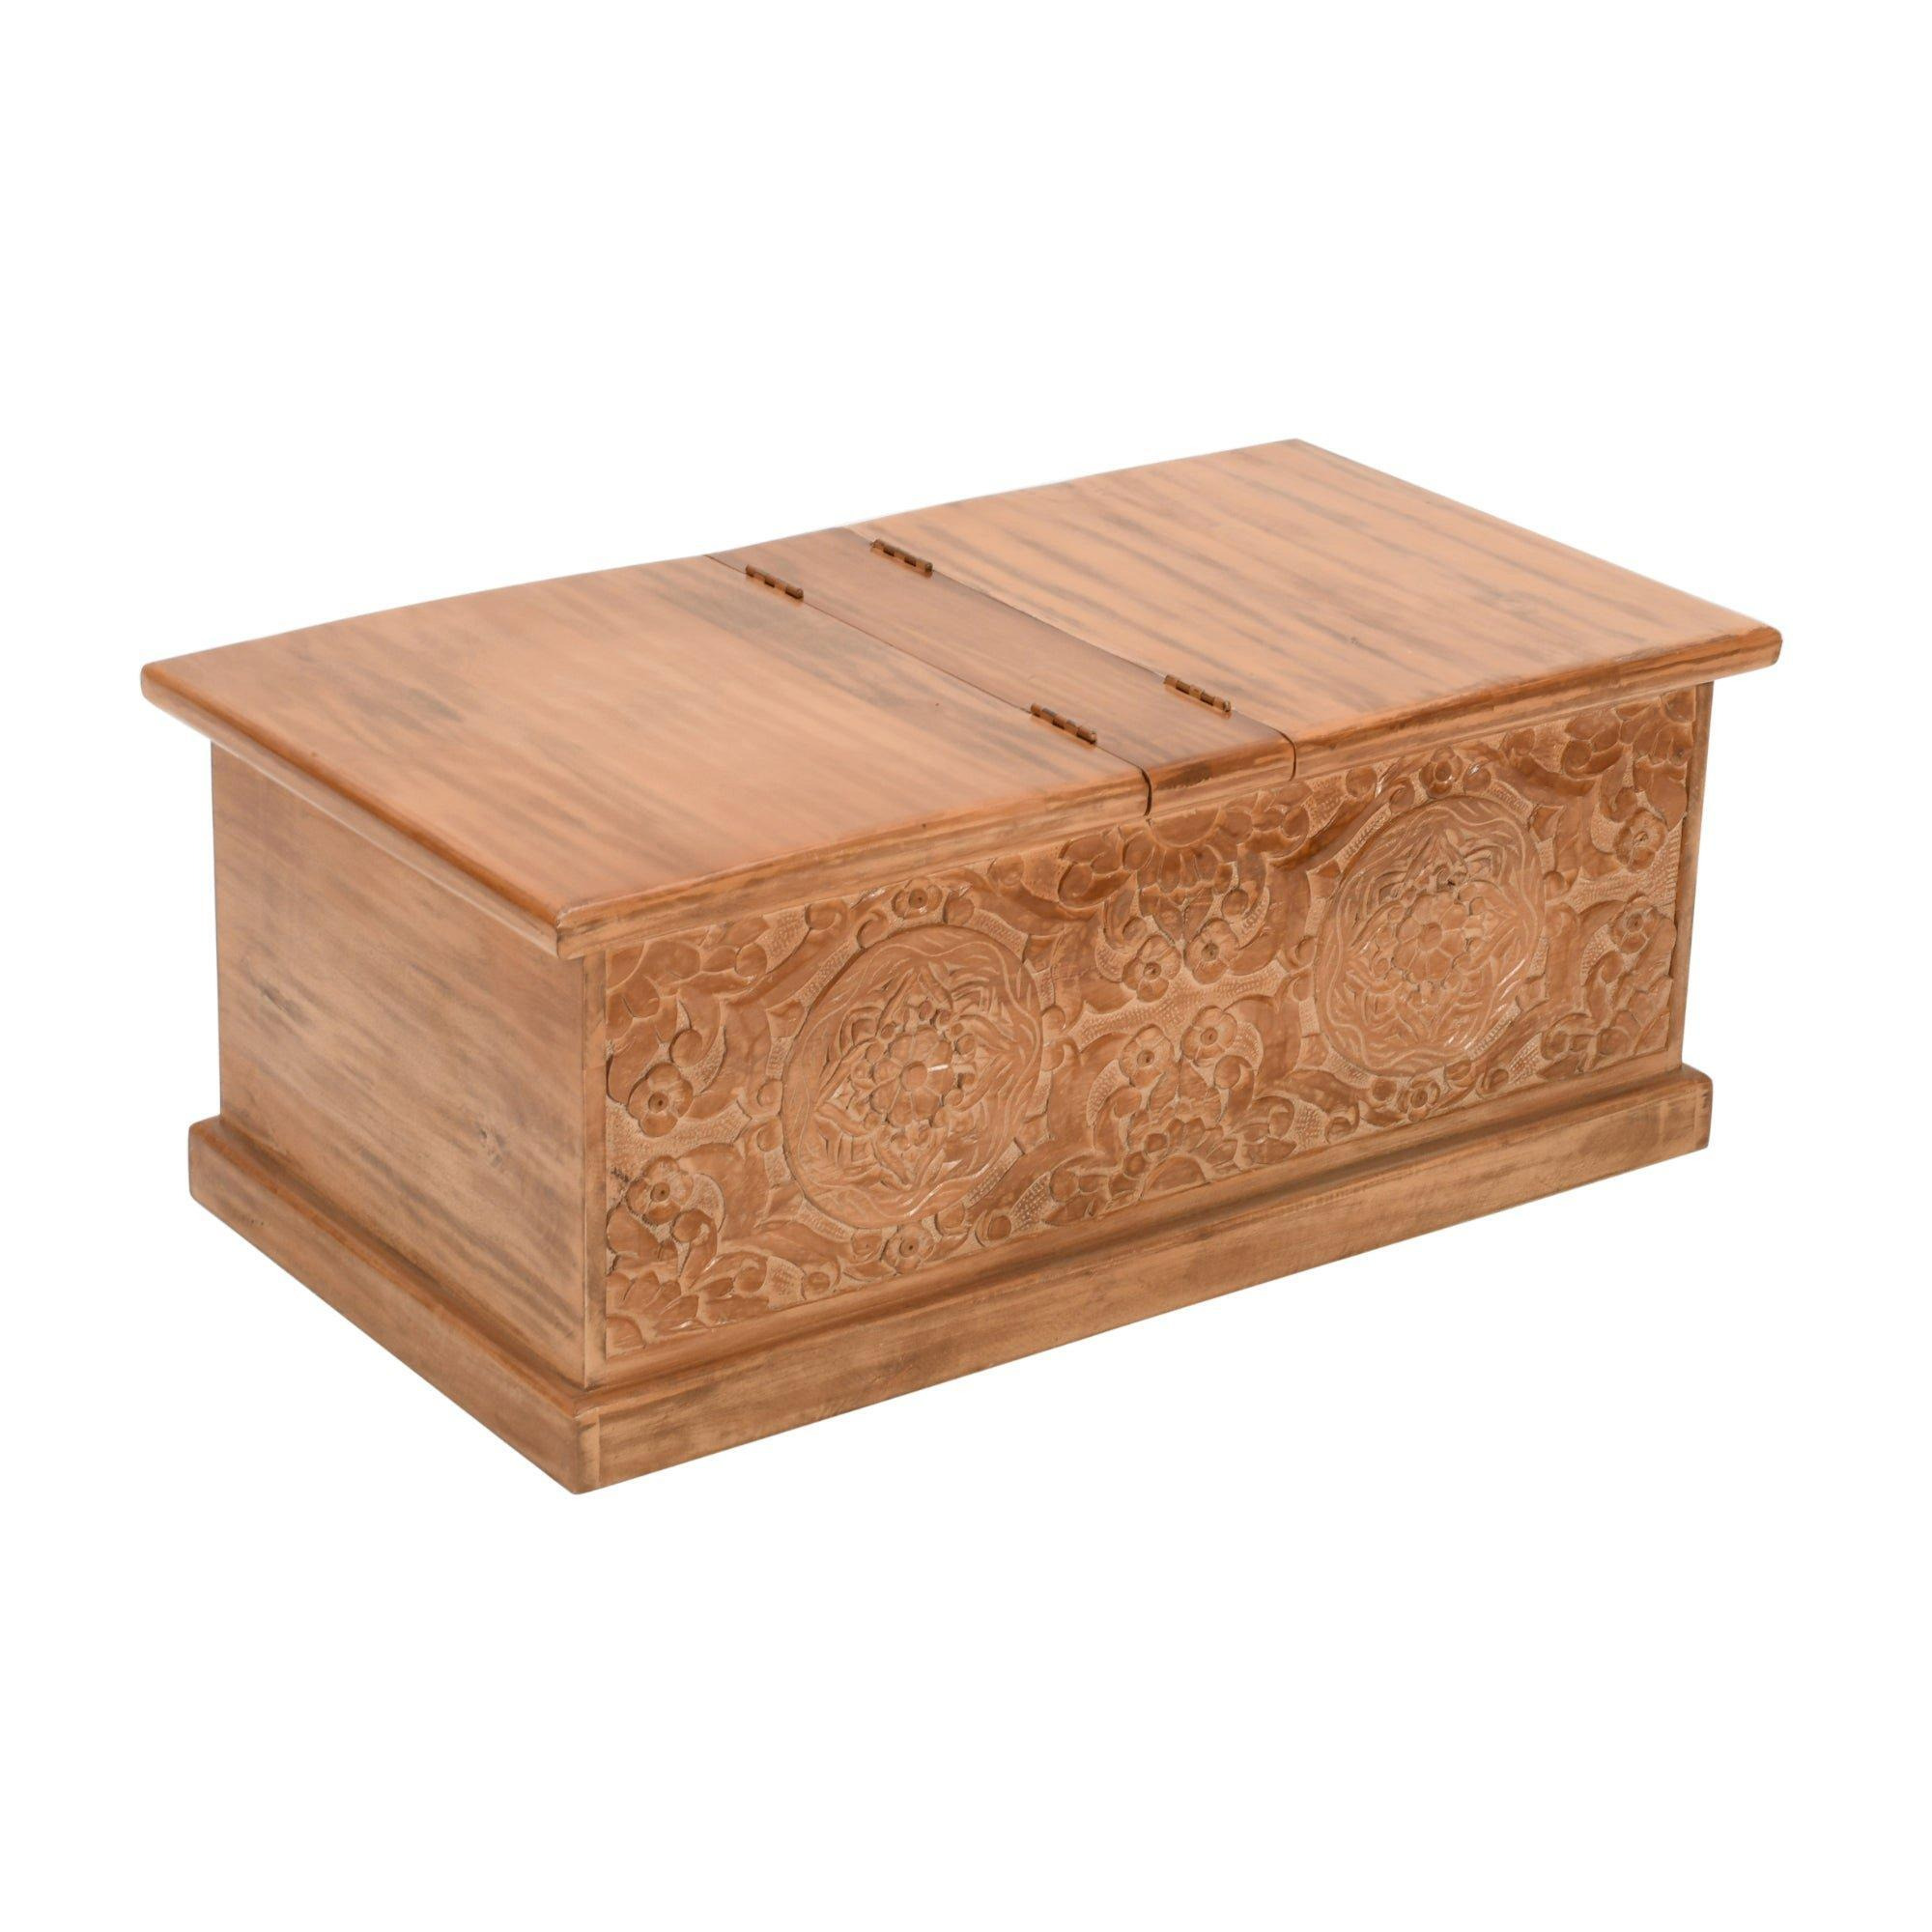 Darvell Mango Wood Coffee Table/Blanket Box - image 1